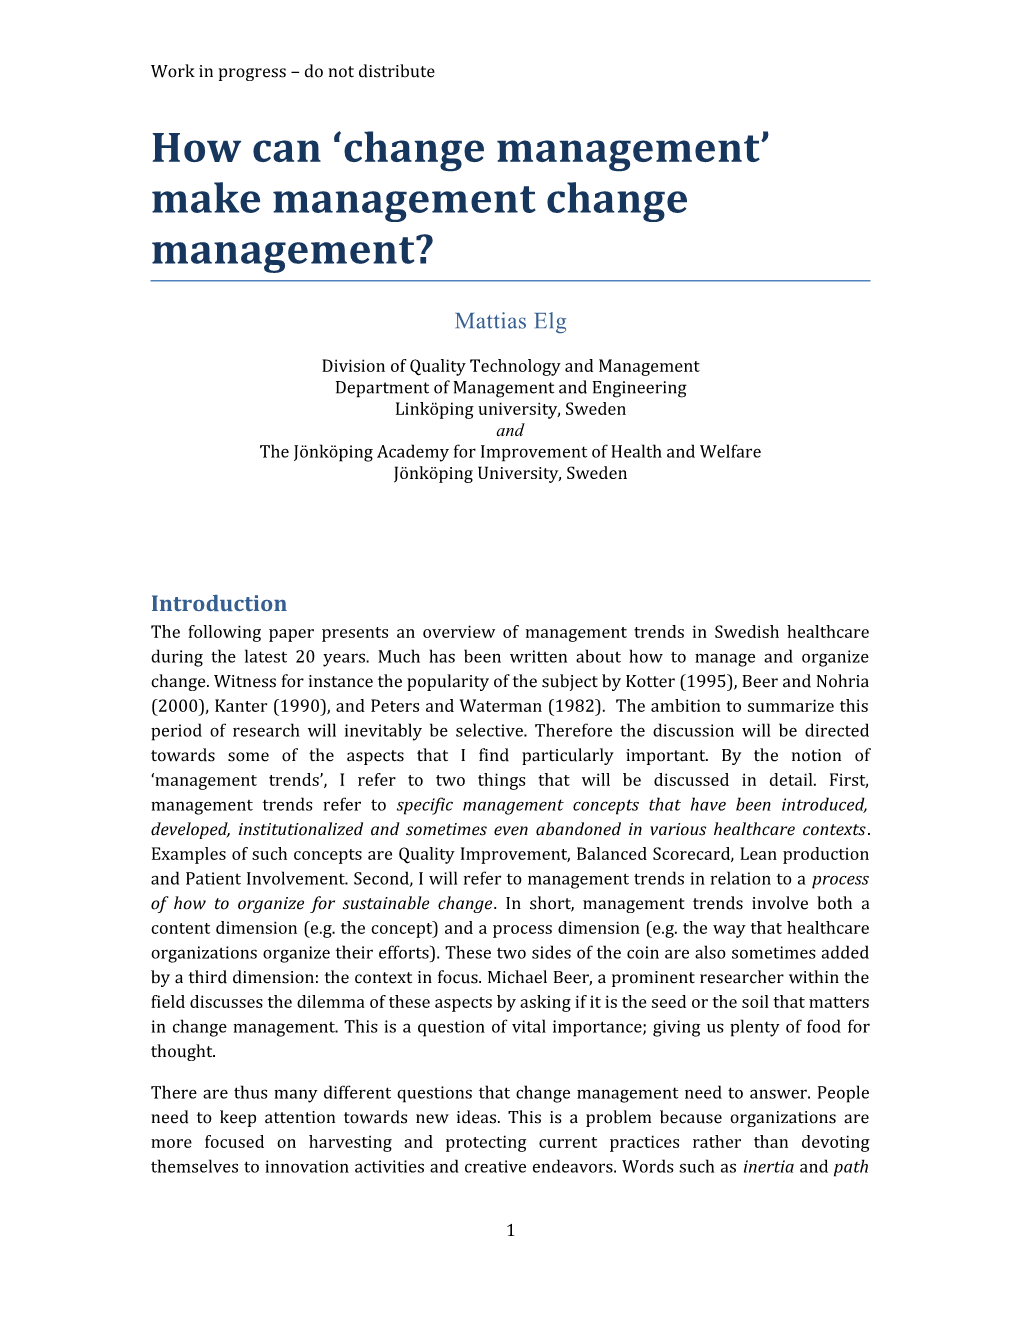 How Can Change Management Make Management Change Management?